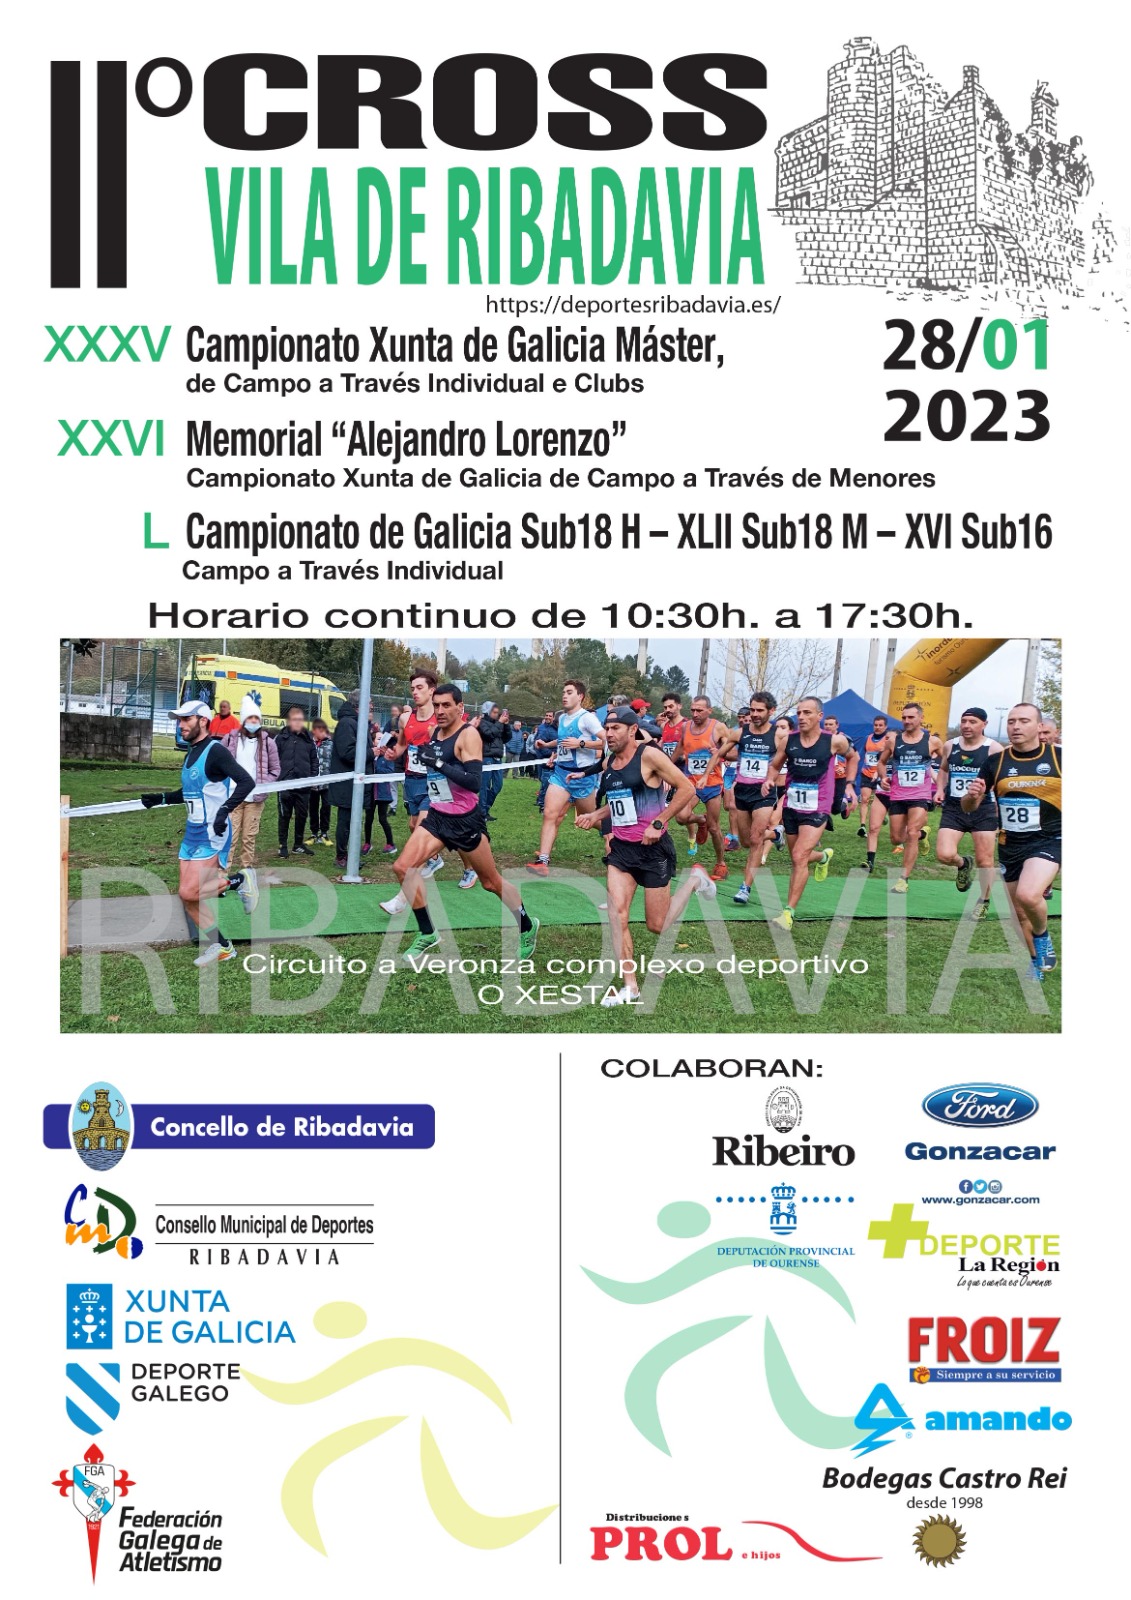 L Campionato de Galicia Sub18 H – XLII Sub18 M – XVI Sub16 de Campo a Través Individual